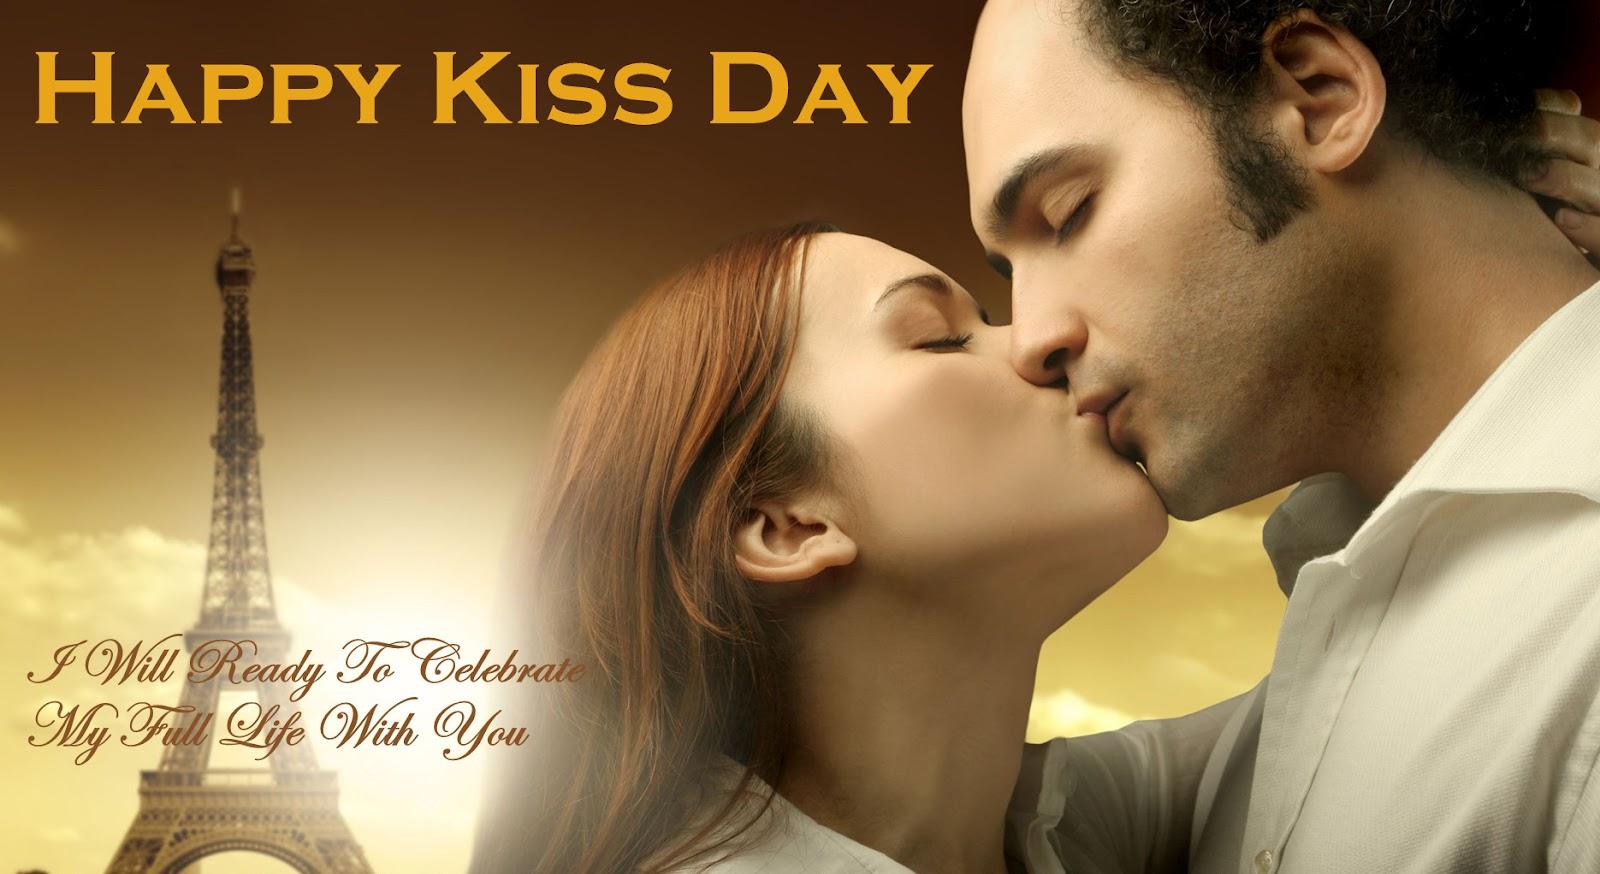 Happy Kiss Day 2017 HD Image For Girlfriend & Boyfriend